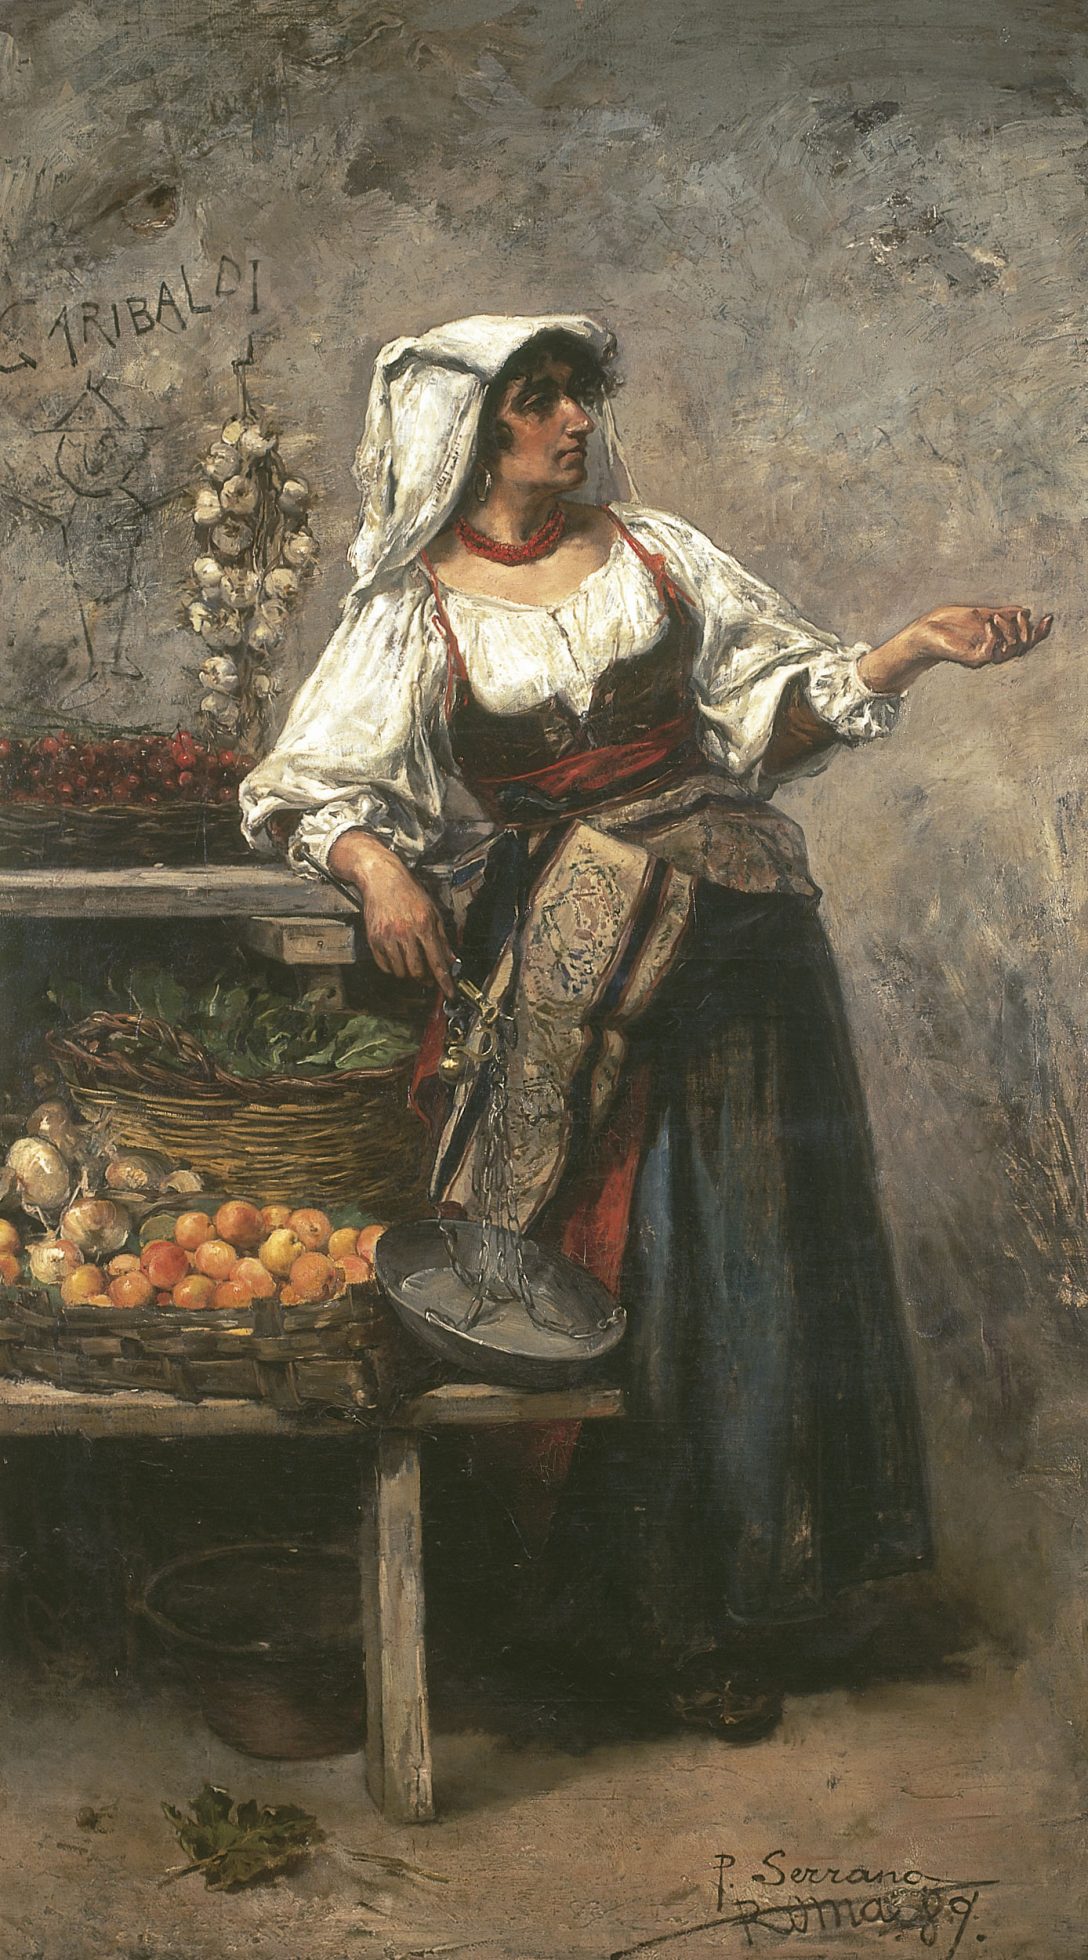 Fruttarolla, Pedro Serrano Bossío, 1889. Óleo sobre lienzo, 230,5 x 128,5 cm.